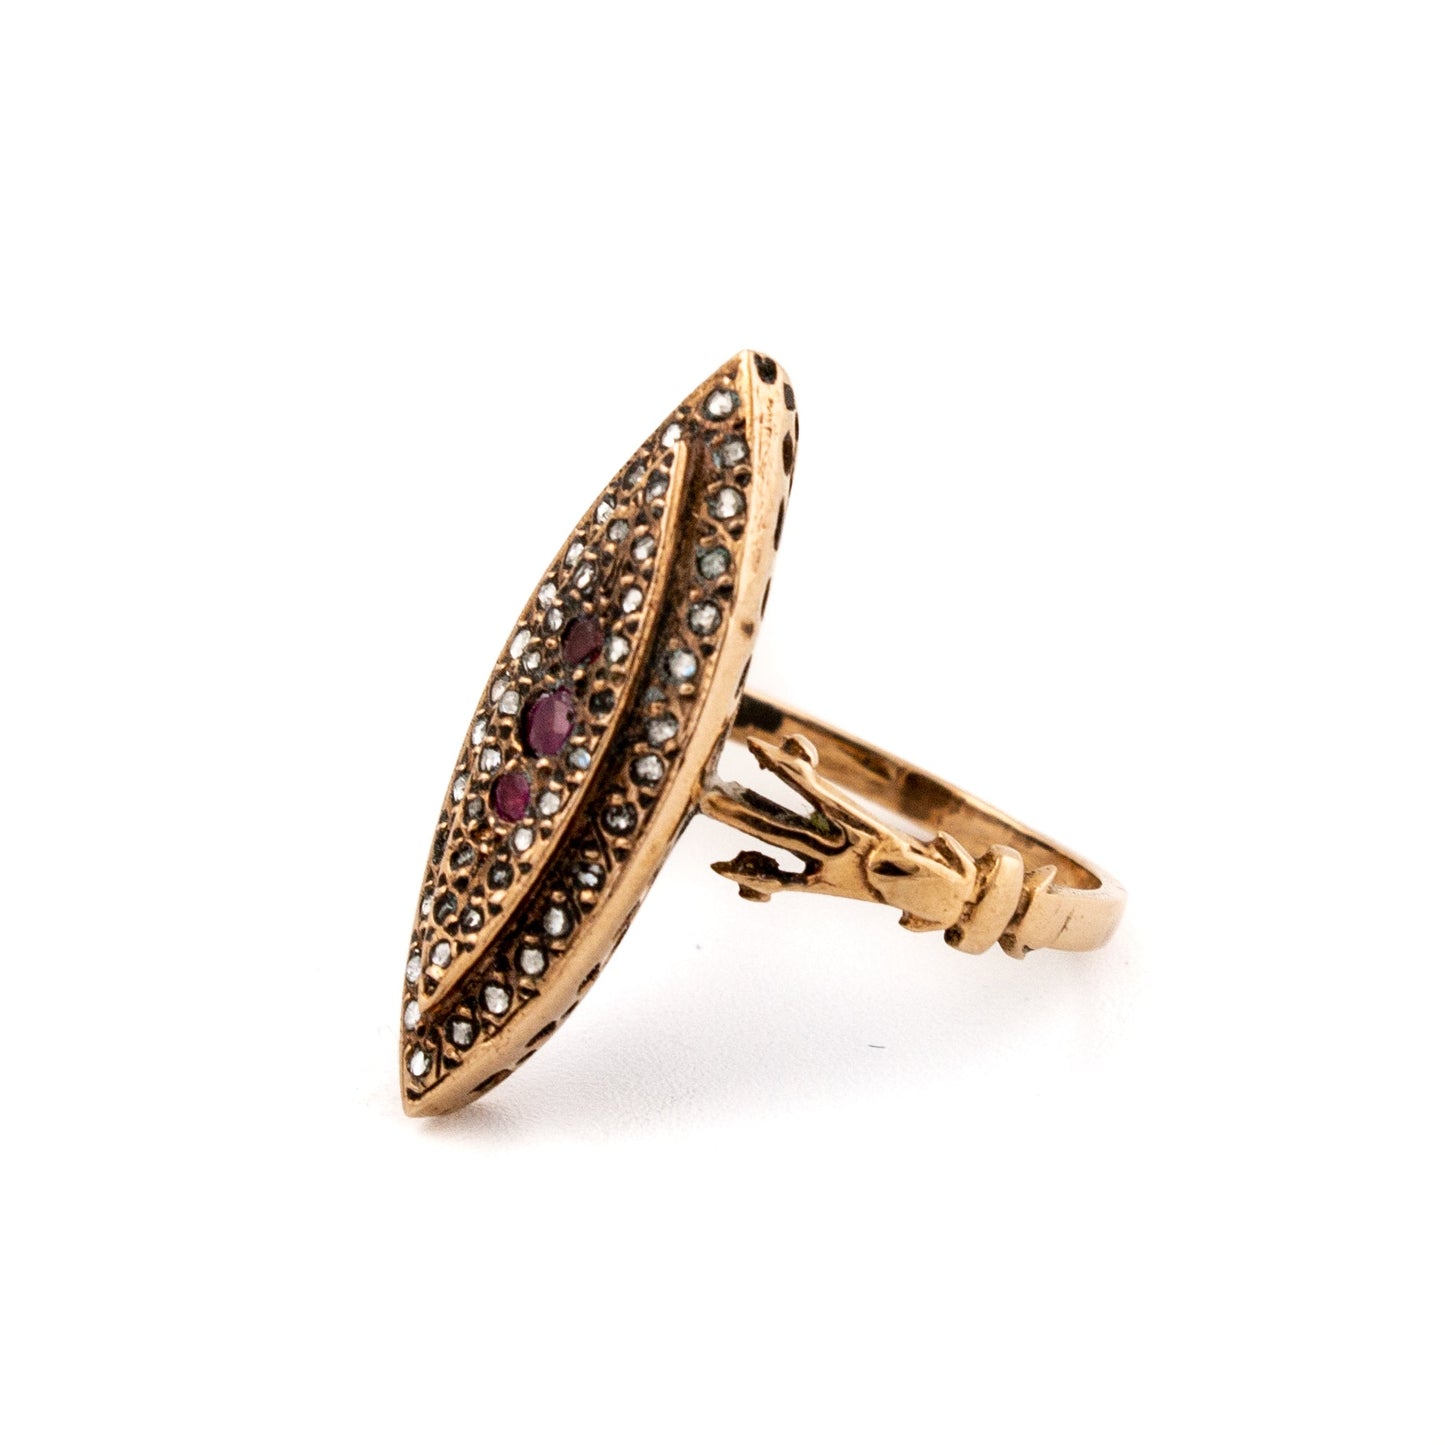 Pinchbeck Diamond Ruby Ring - Kingdom Jewelry